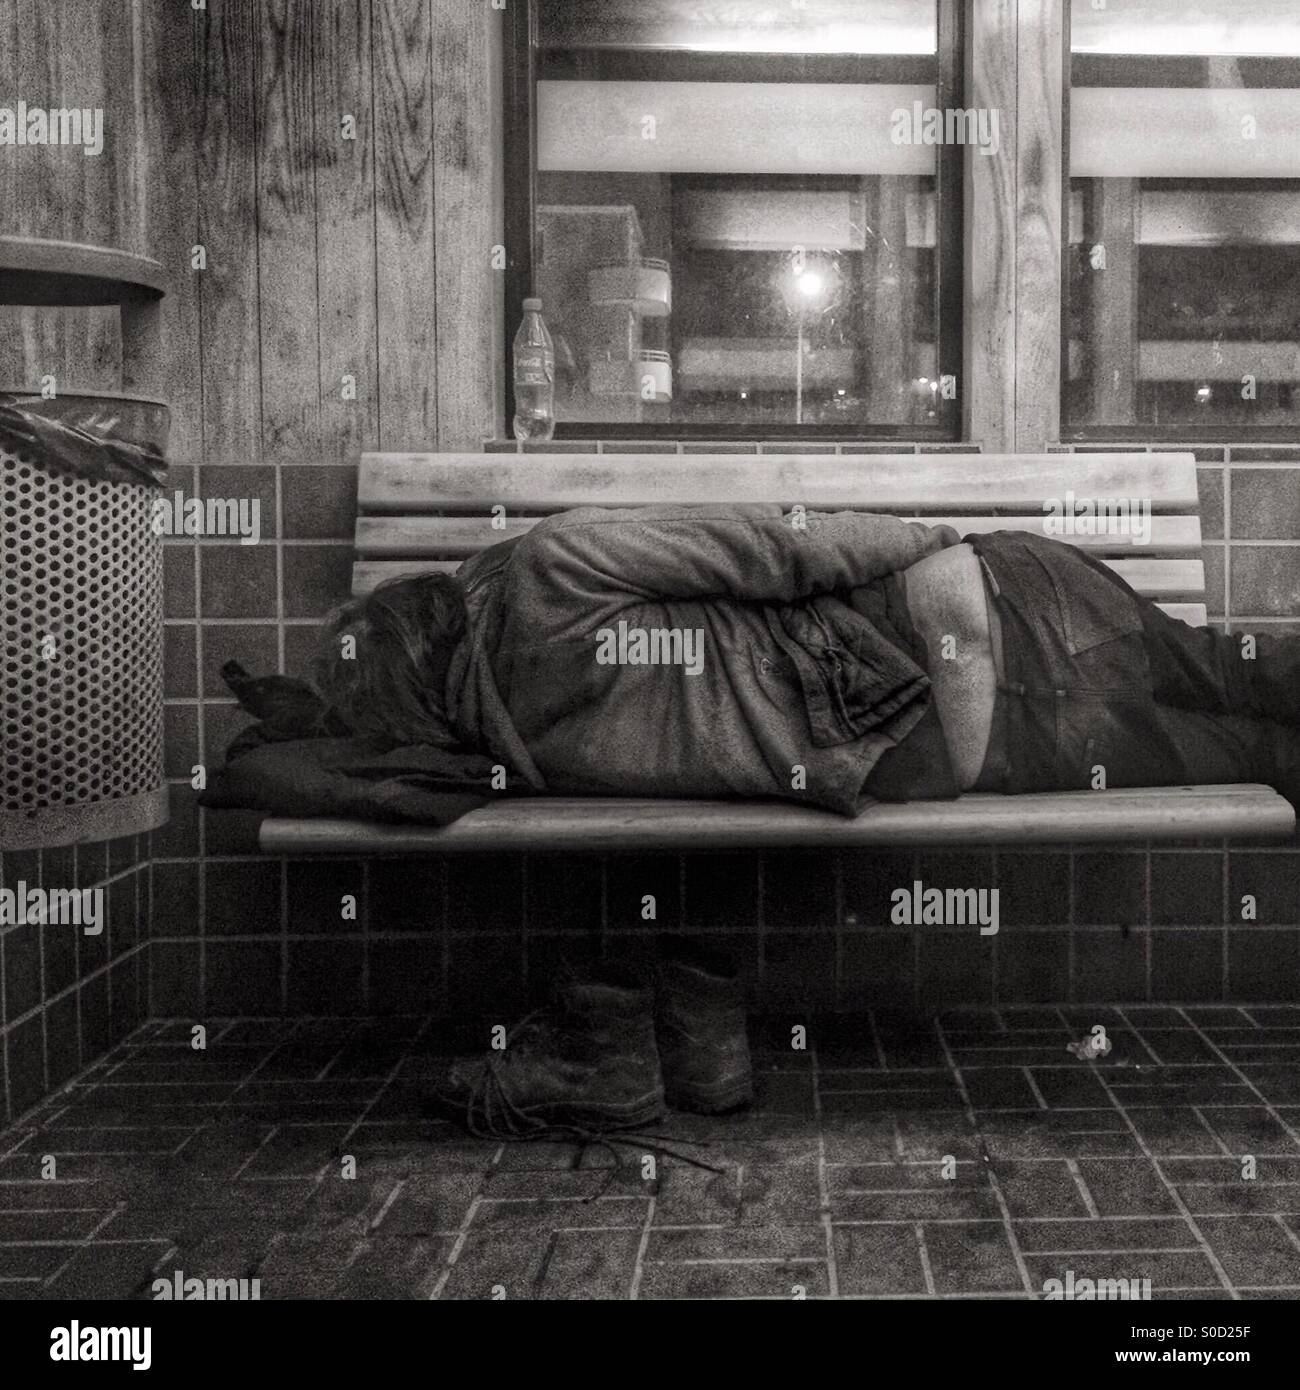 Homeless man sleeping on a bench Stock Photo